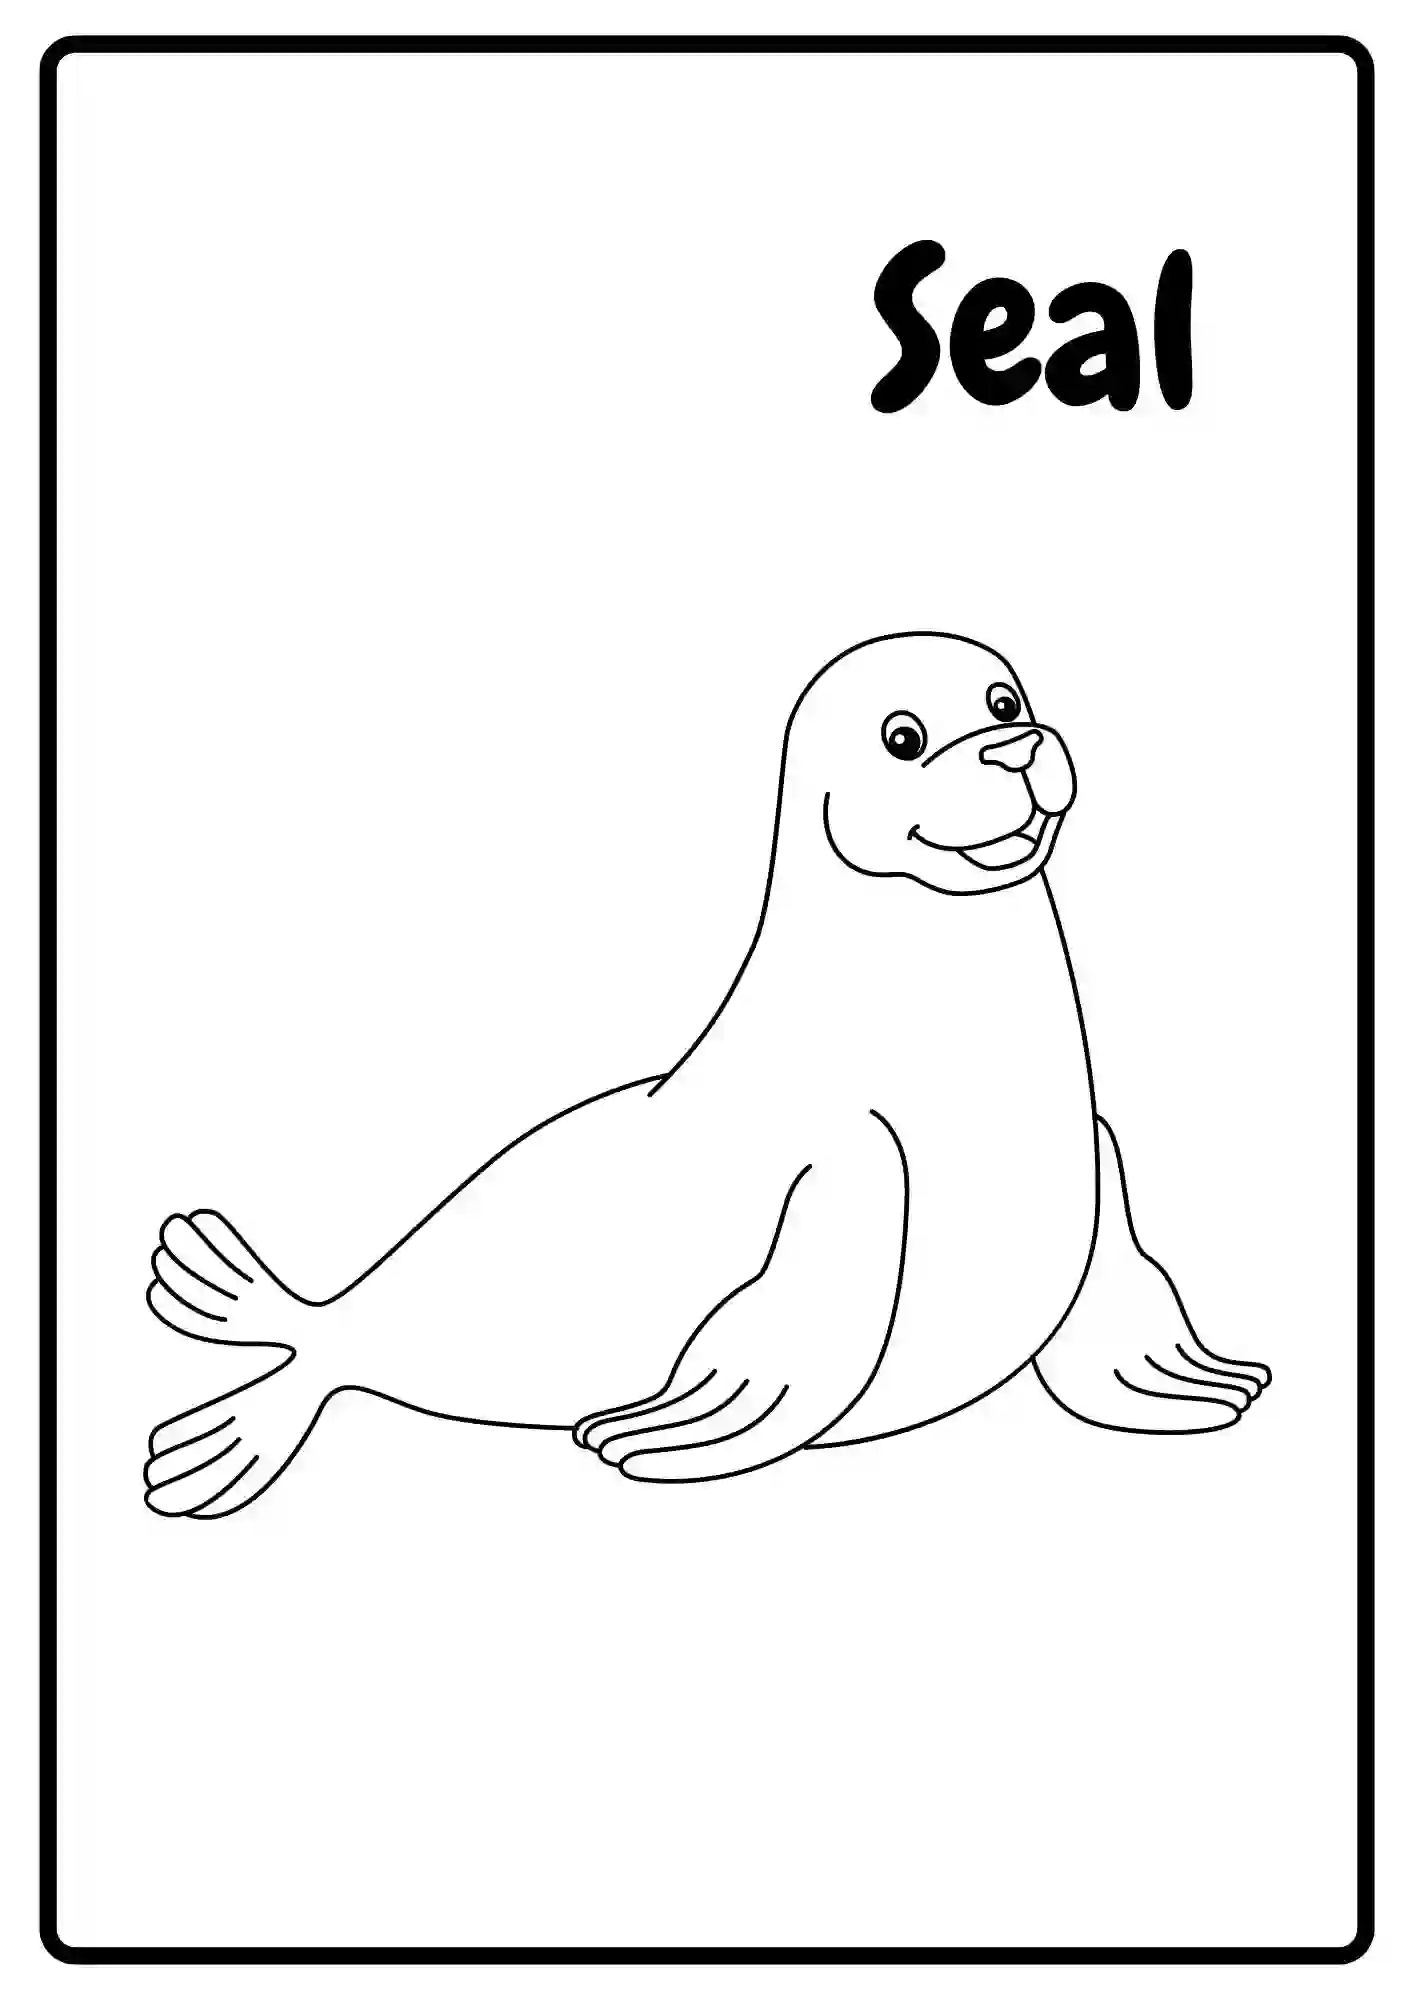 Sea Animal Coloring Worksheets for kindergarten (SEAL)